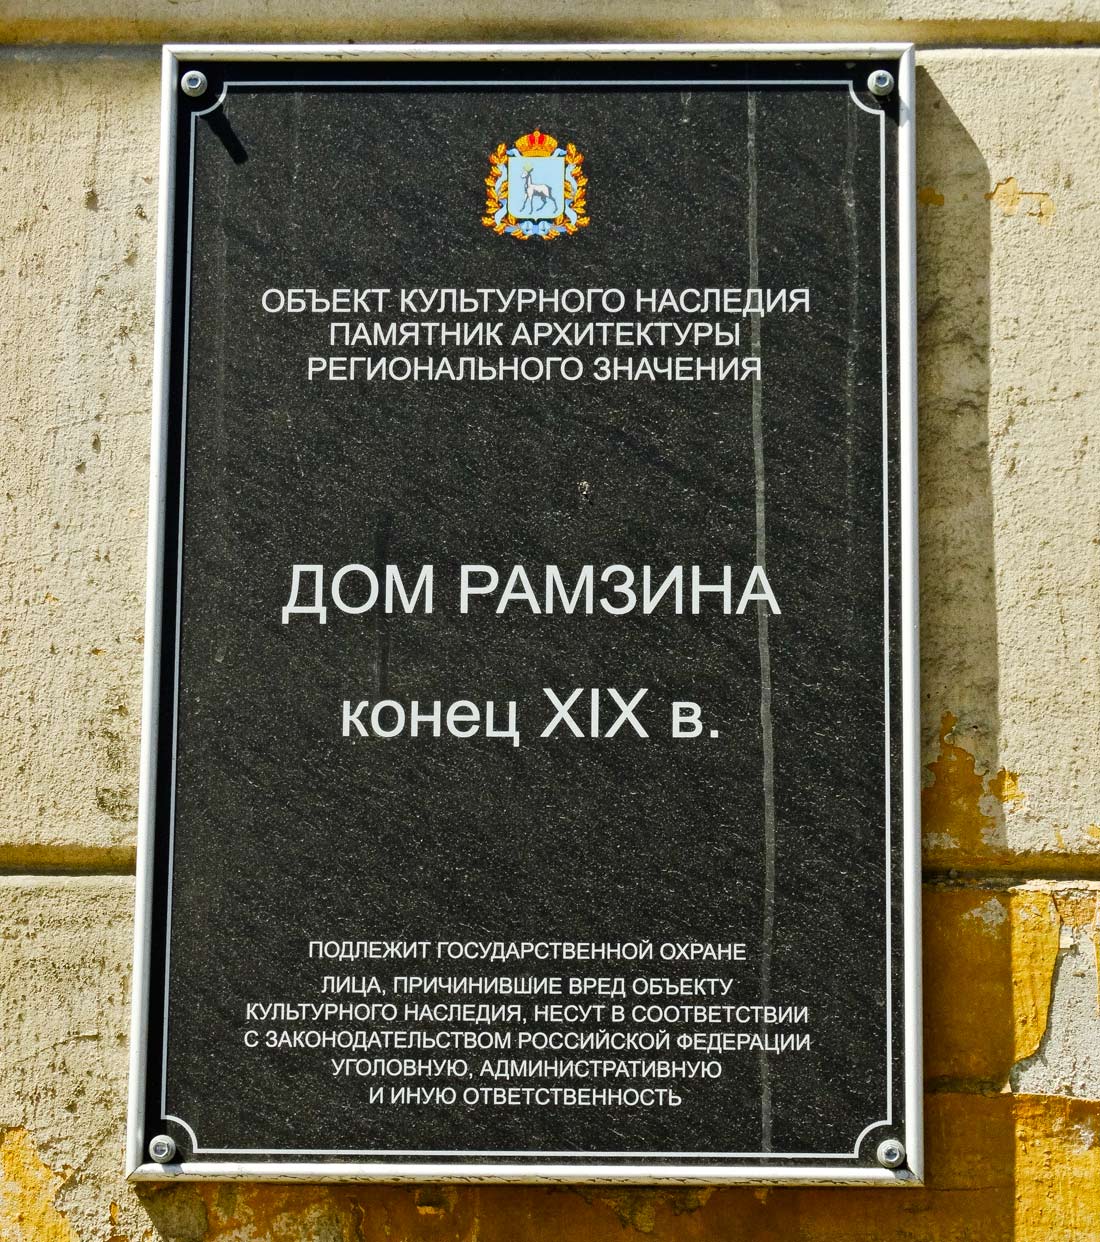 Samara, Улица Водников, 40. Samara — Protective signs